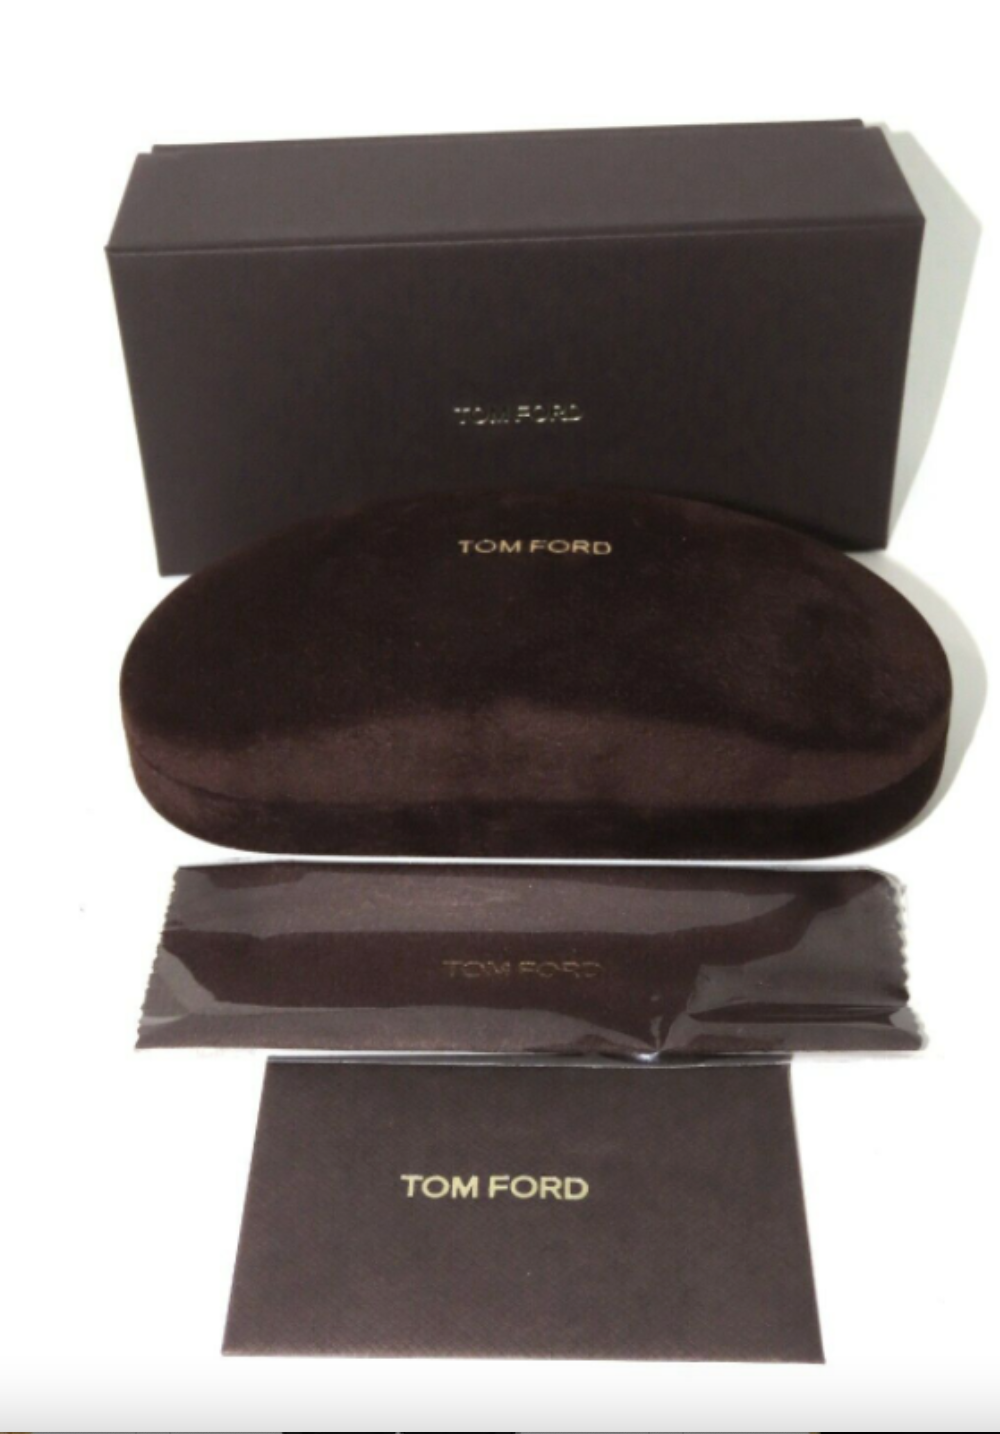 Tom Ford FT0250 Colette 08C Shiny Gumetal Sunglasses